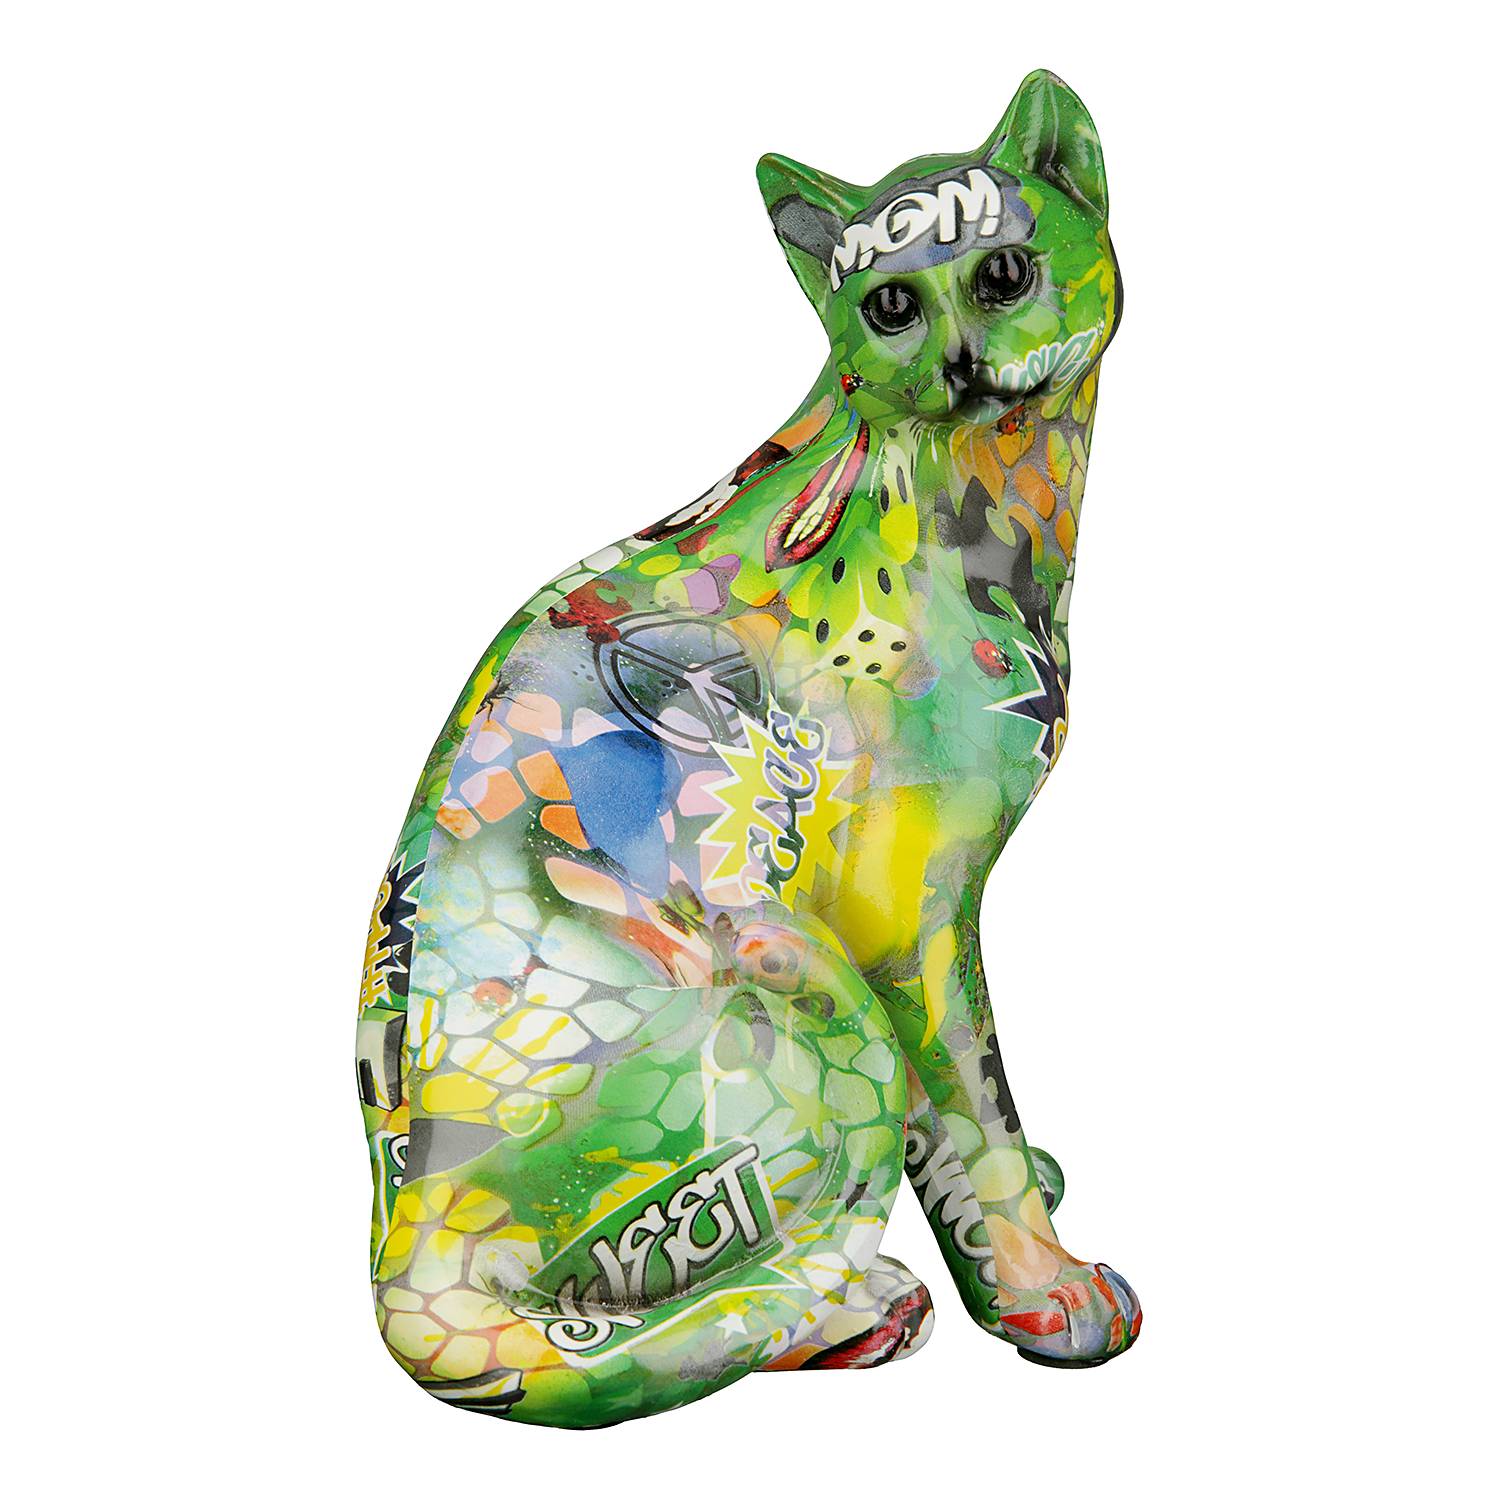 Figur Katze Street Art kaufen | home24